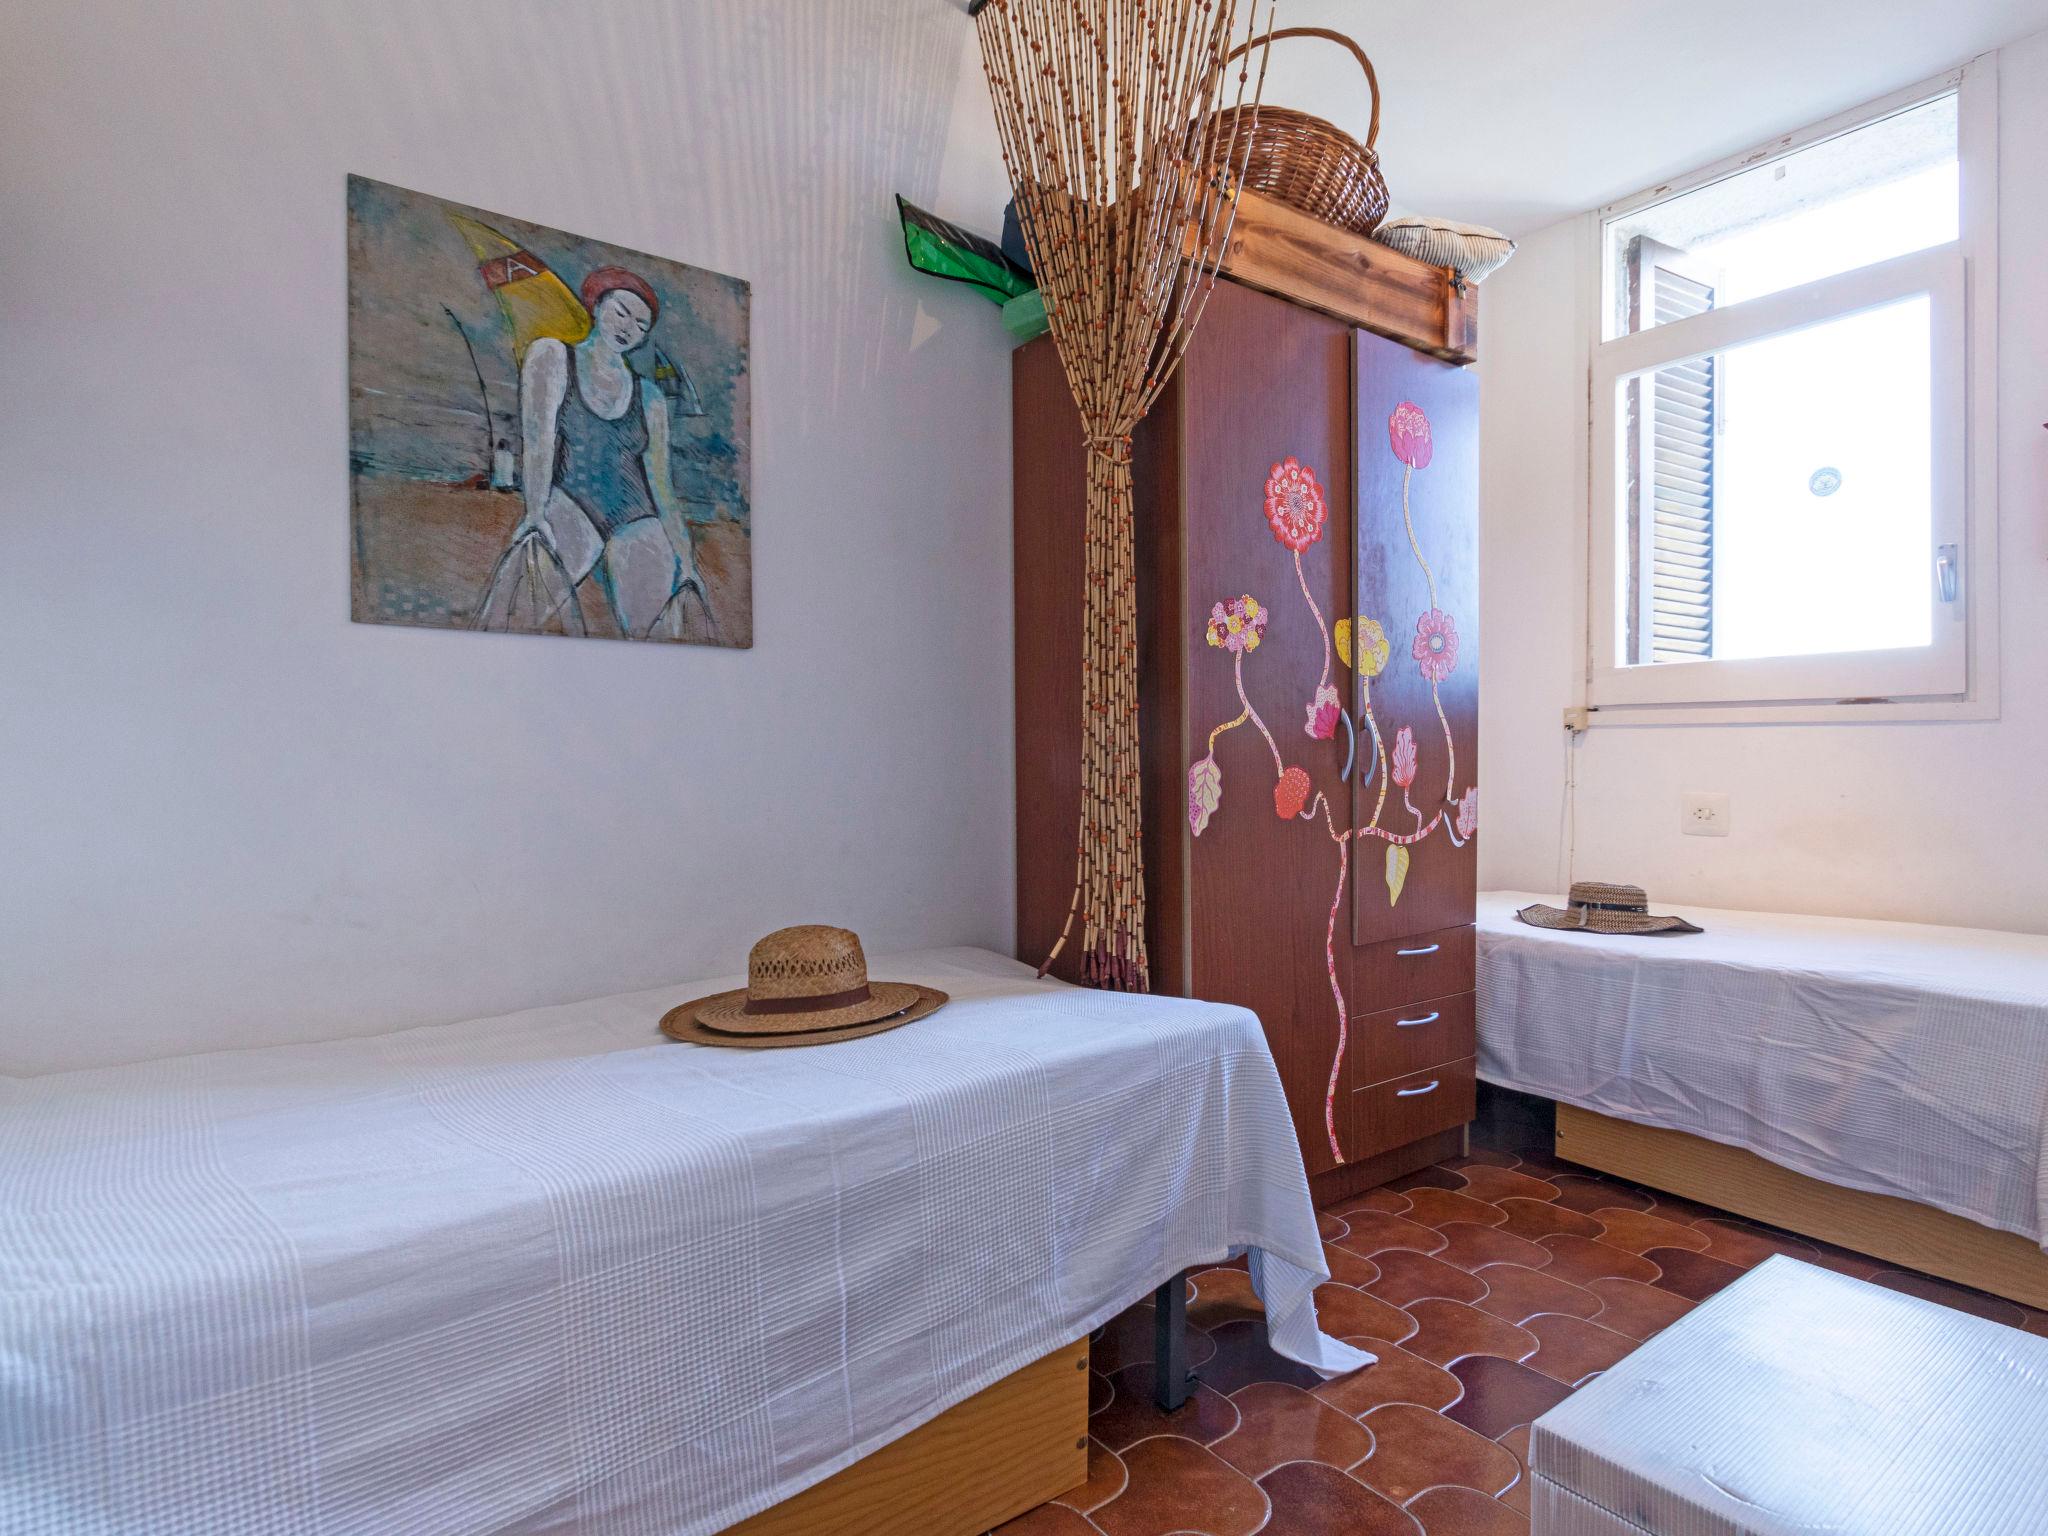 Photo 9 - Appartement de 3 chambres à Torredembarra avec piscine et vues à la mer